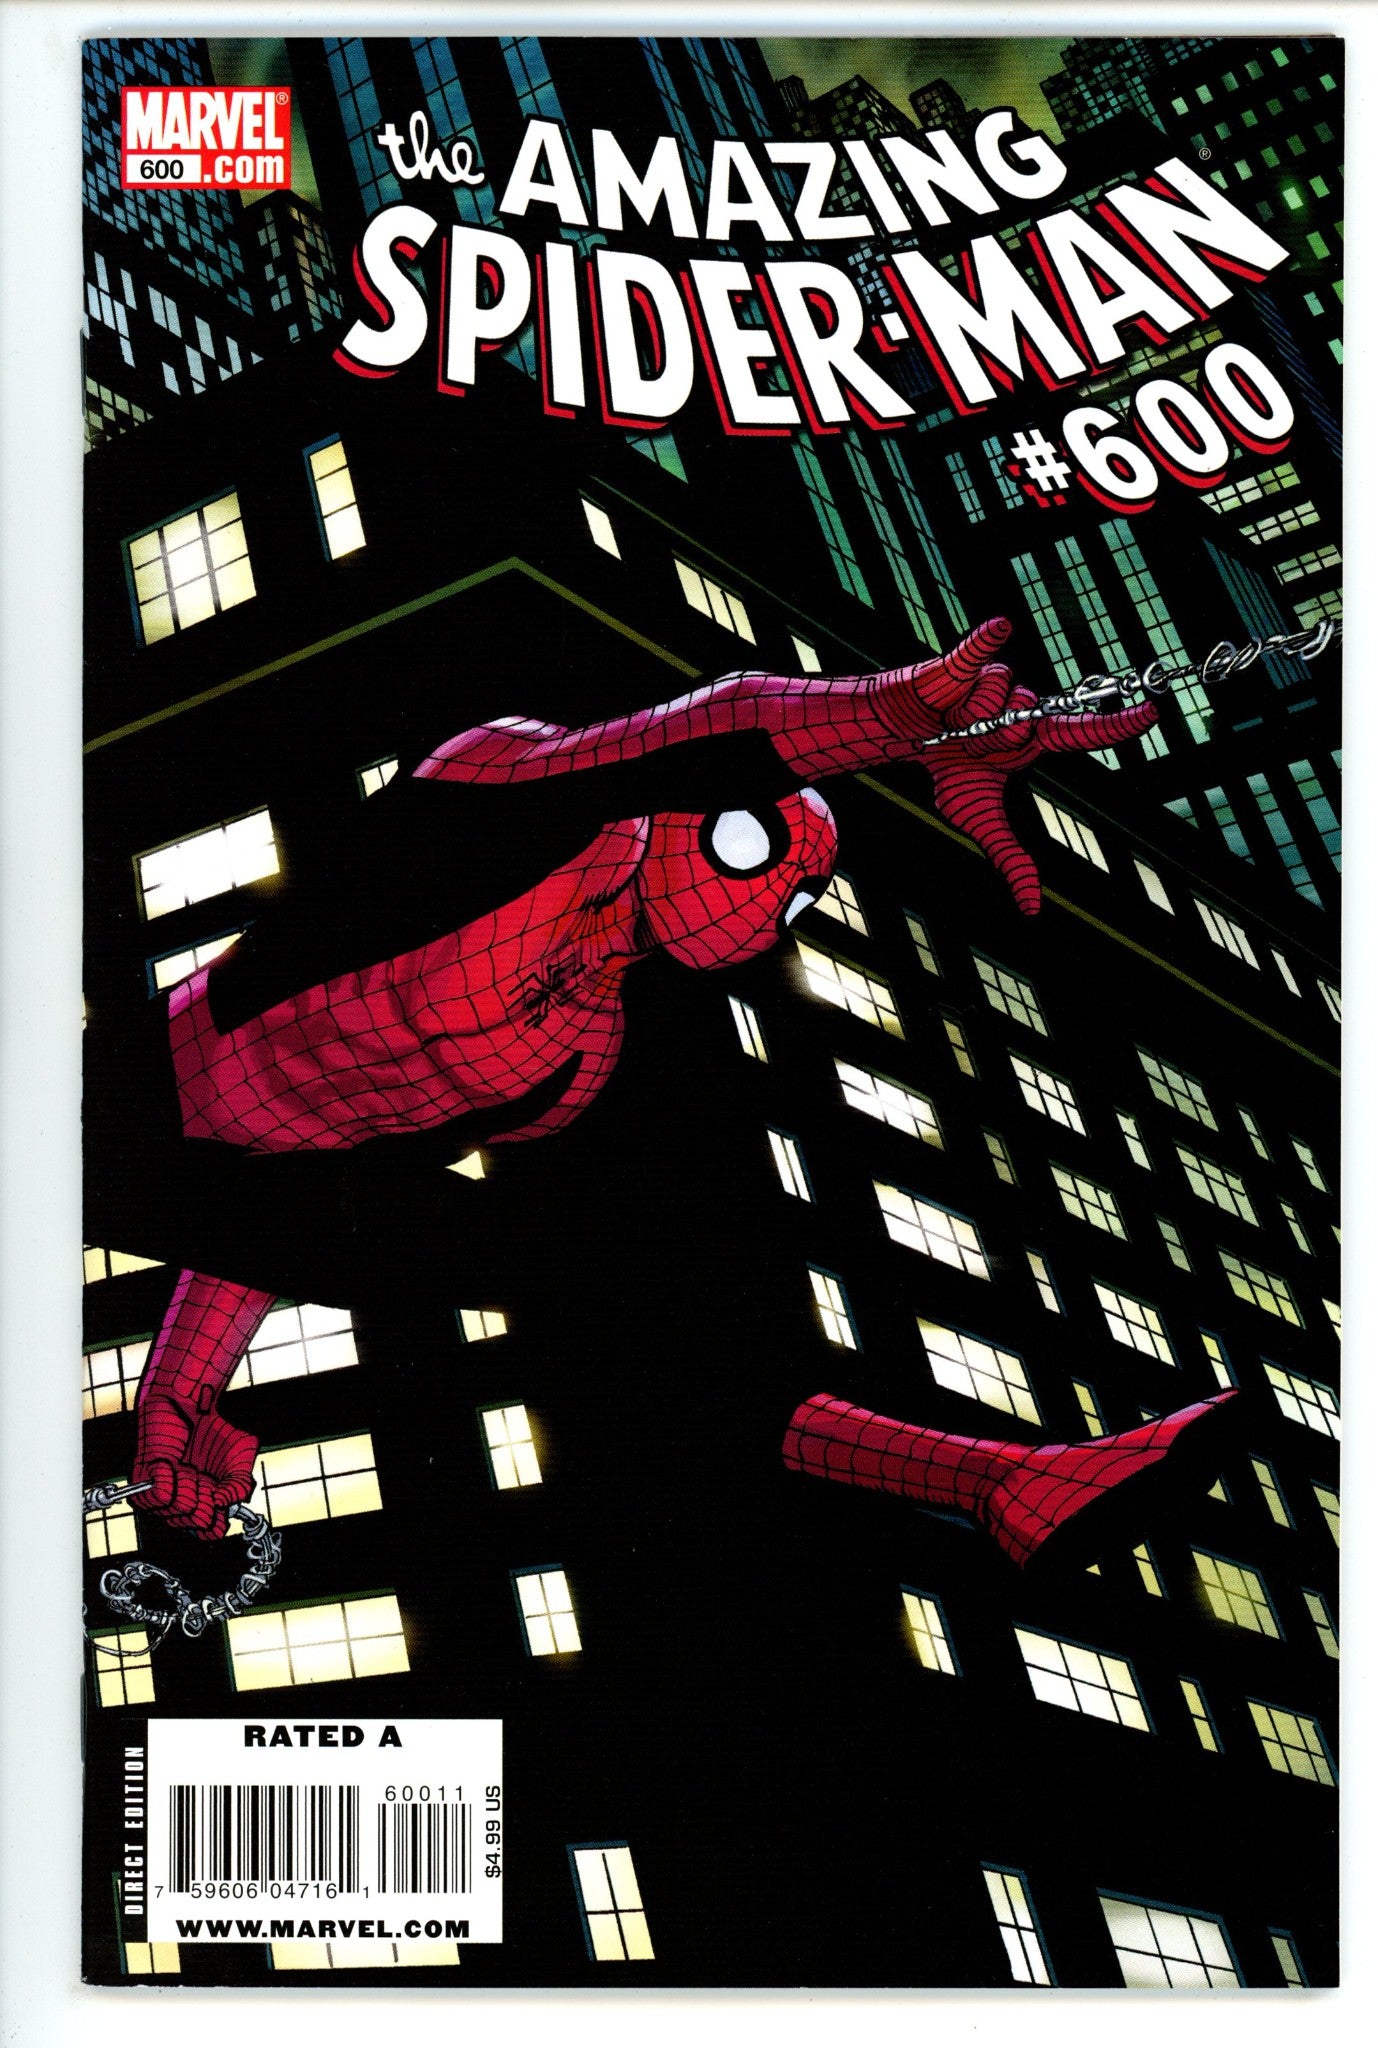 The Amazing Spider-Man Vol 2 600 VF+ (8.5) (2009) Jr. Wraparound Variant 